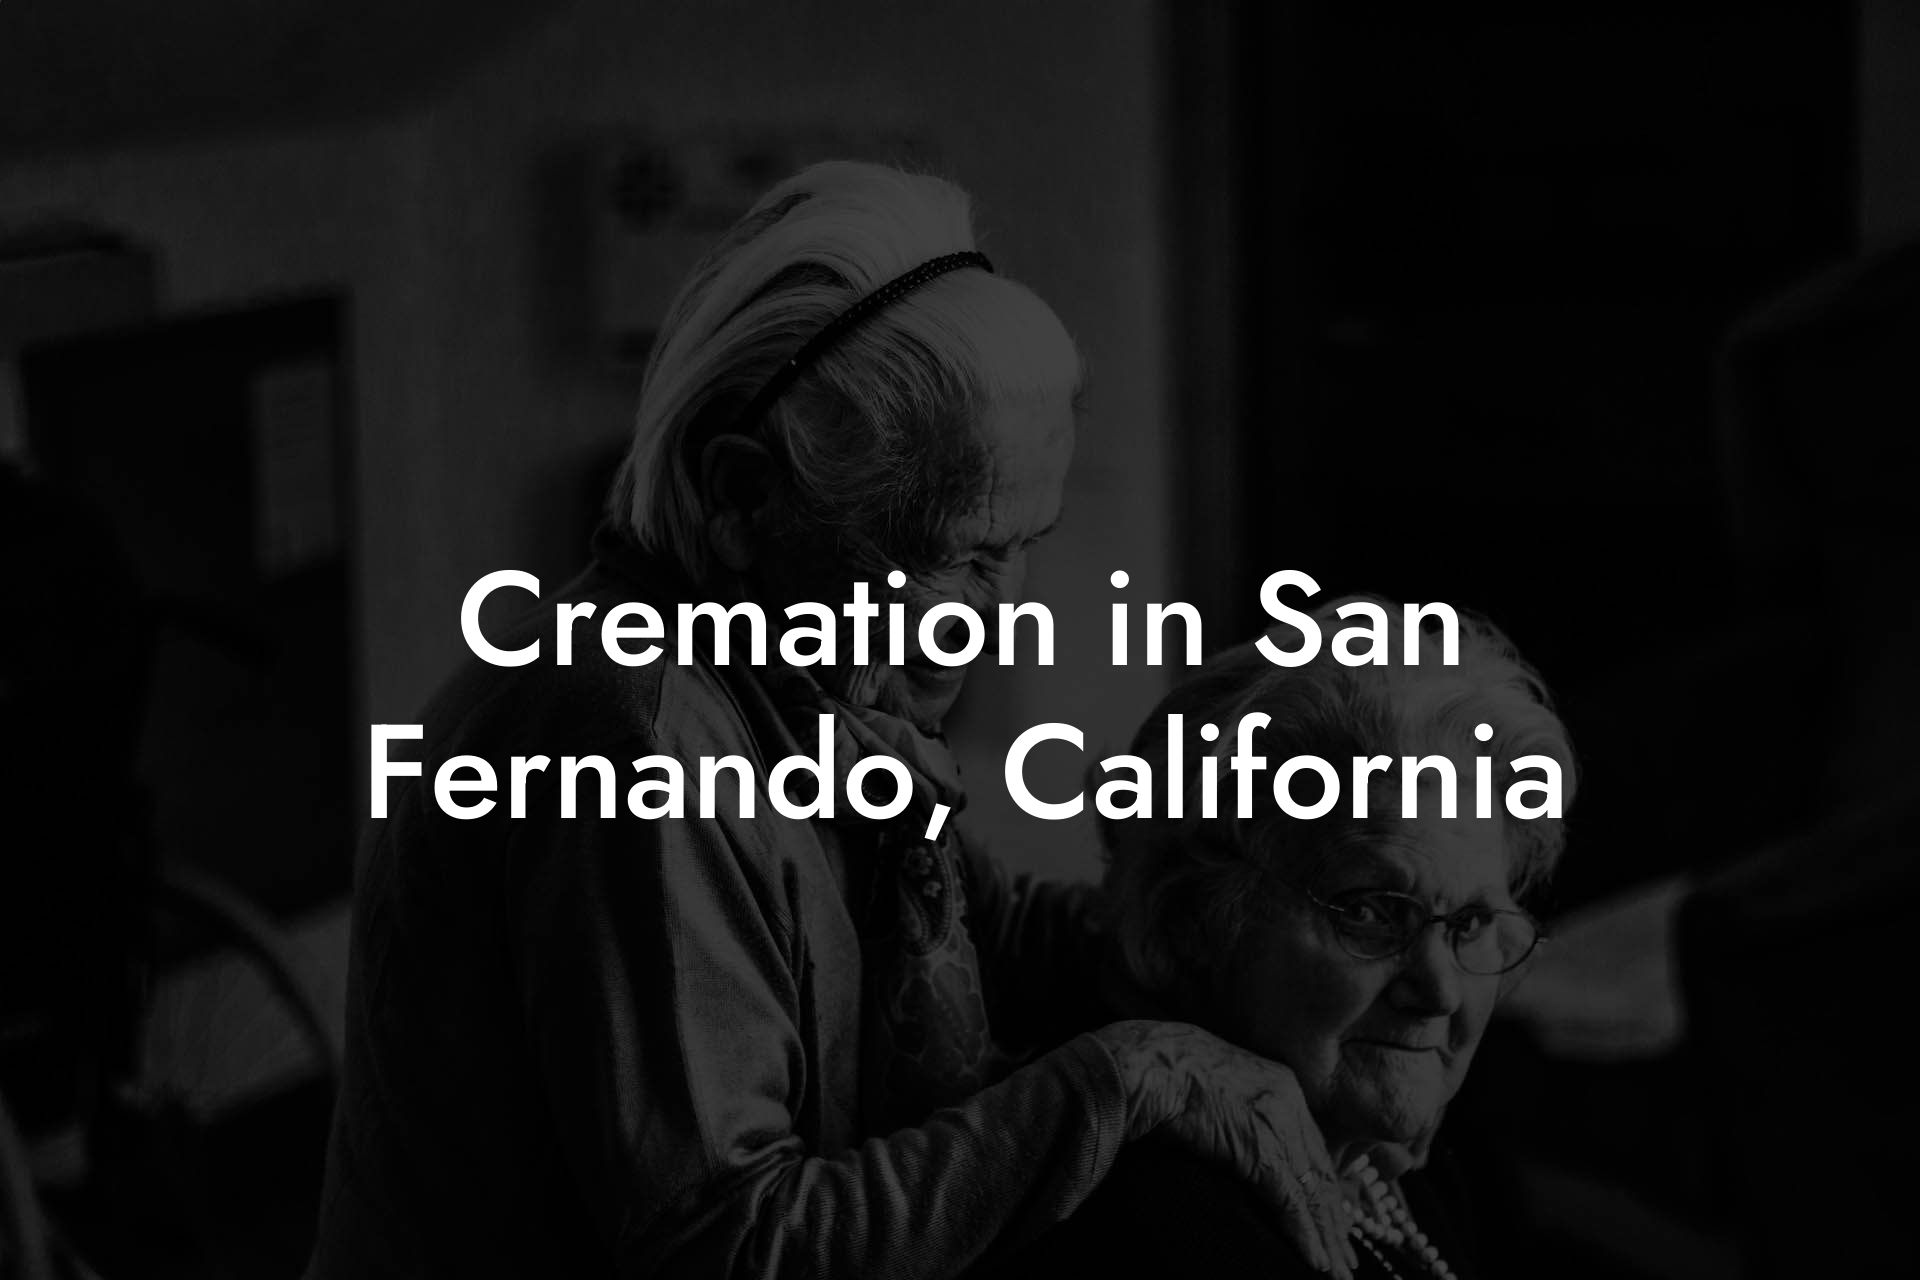 Cremation in San Fernando, California